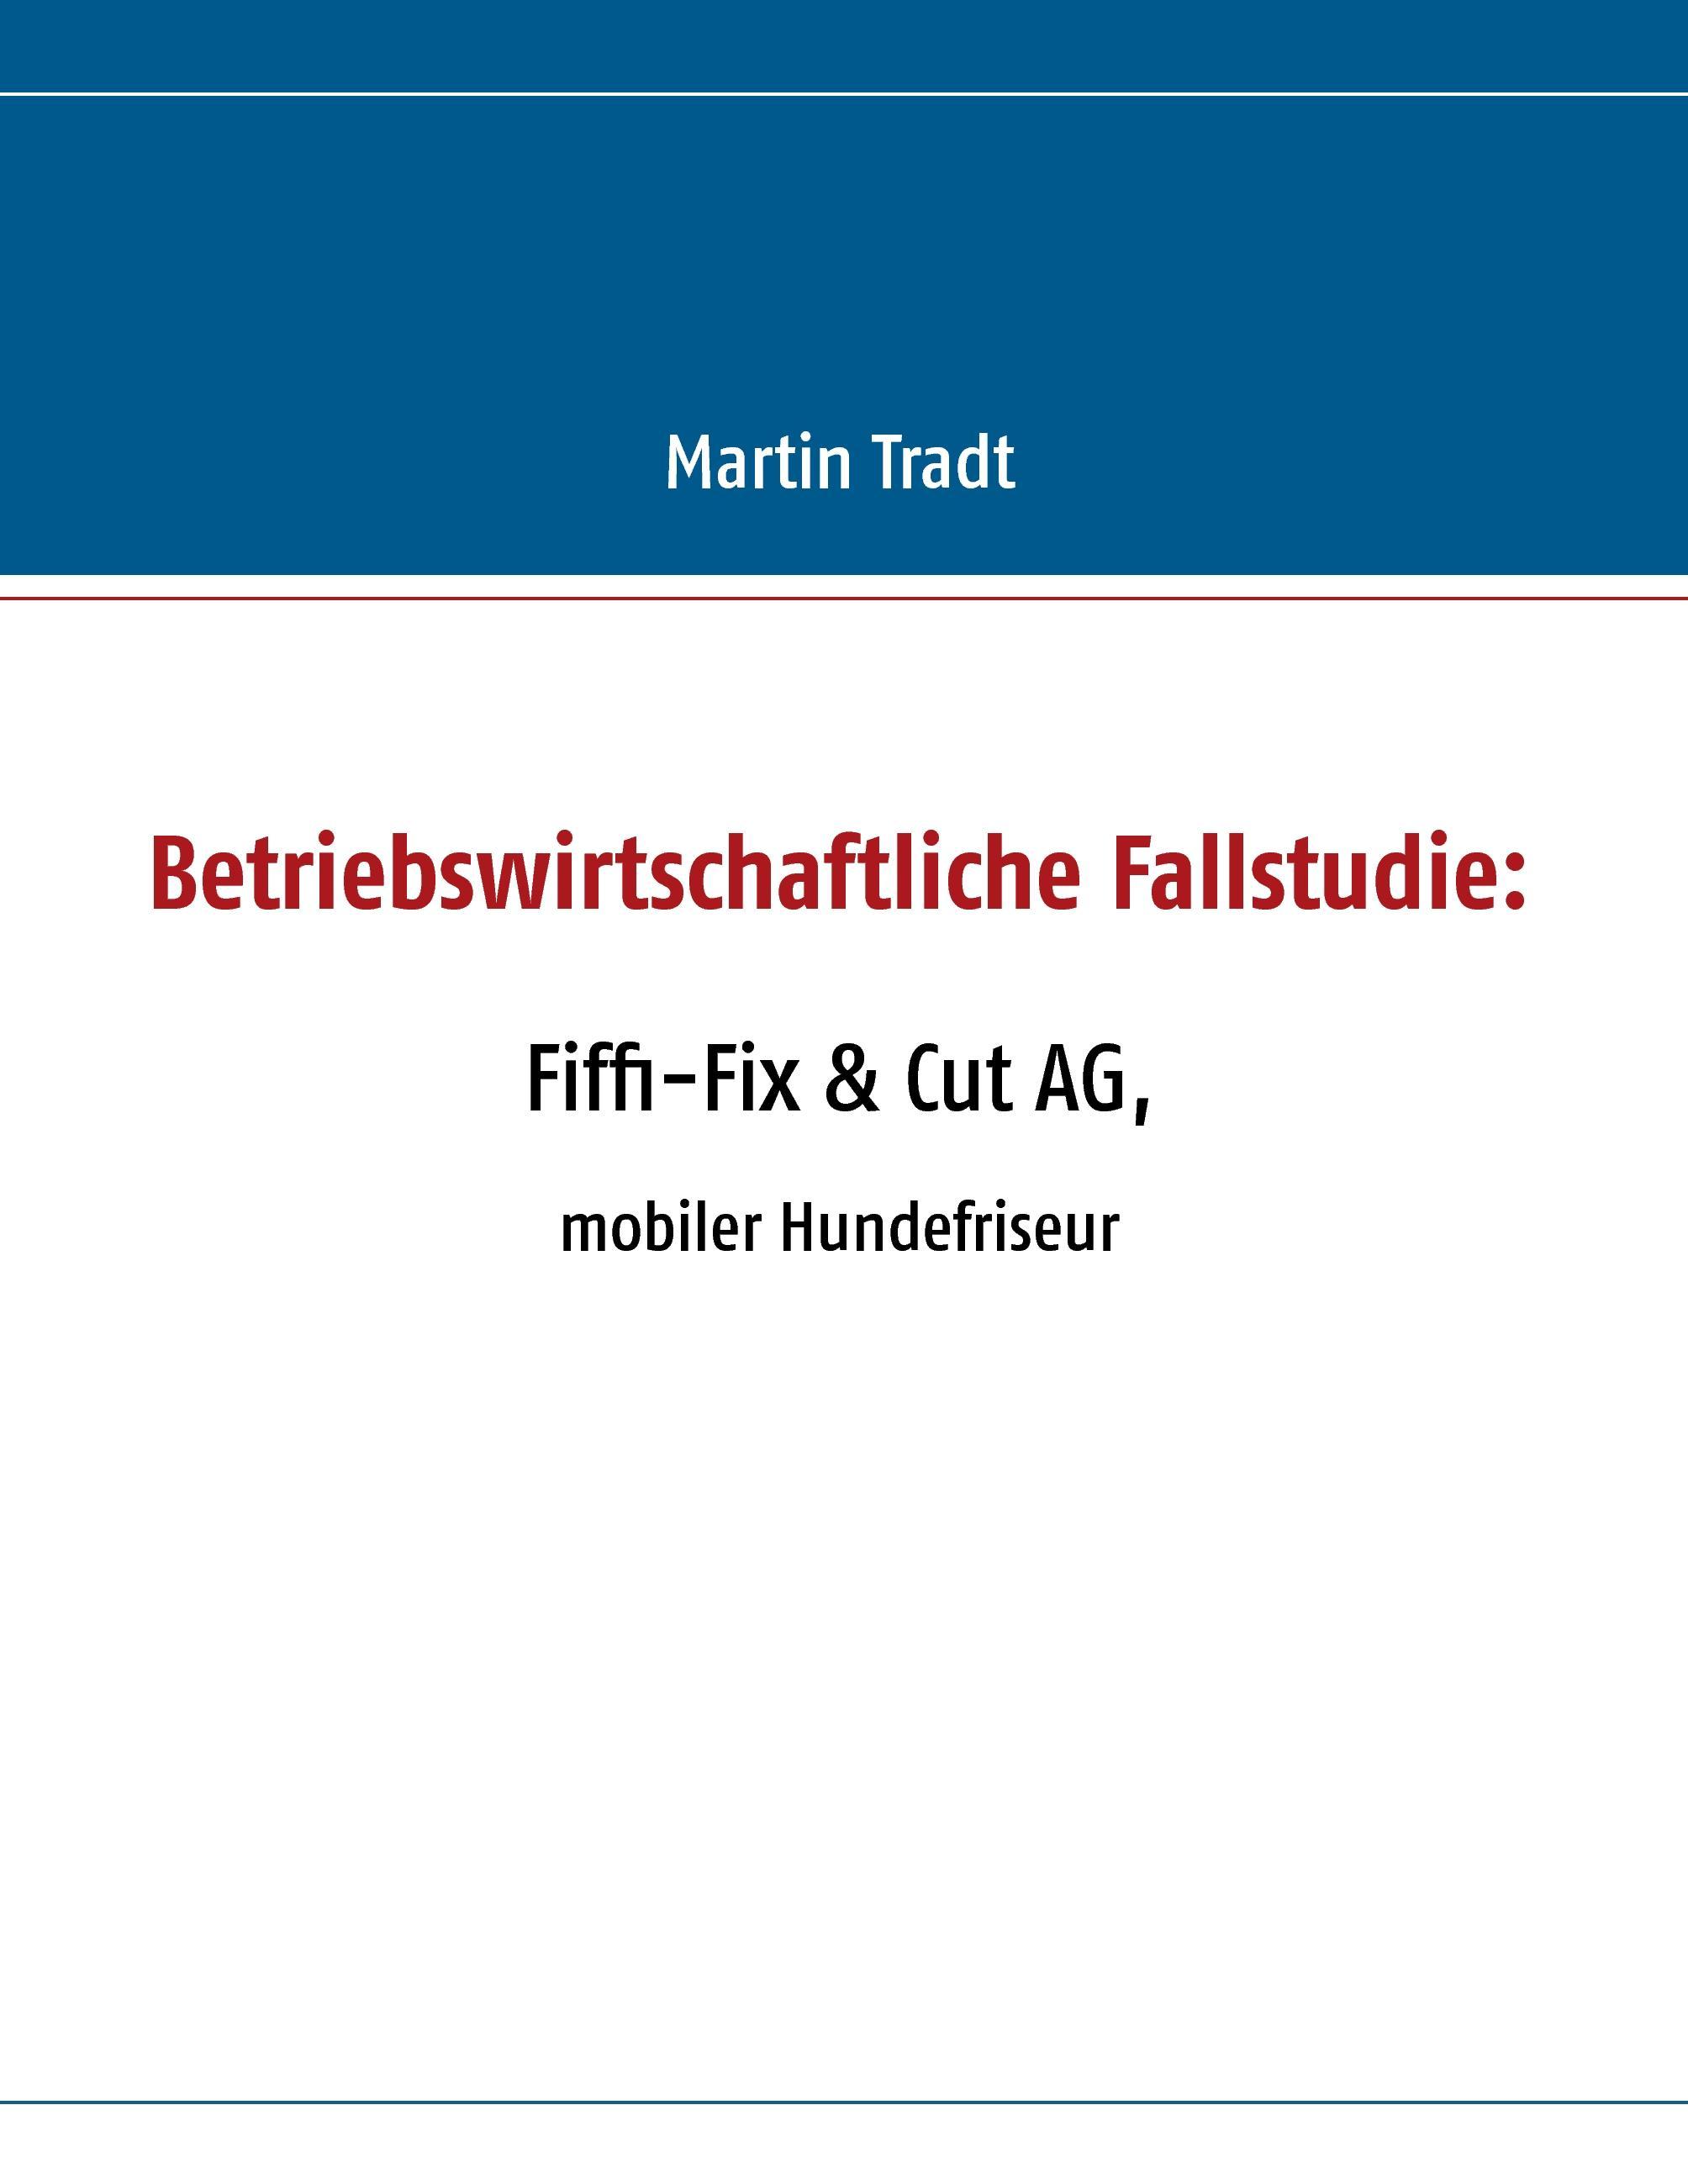 Betriebswirtschaftliche Fallstudie: Fiffi-Fix & Cut AG Tradt, Martin - Martin Tradt